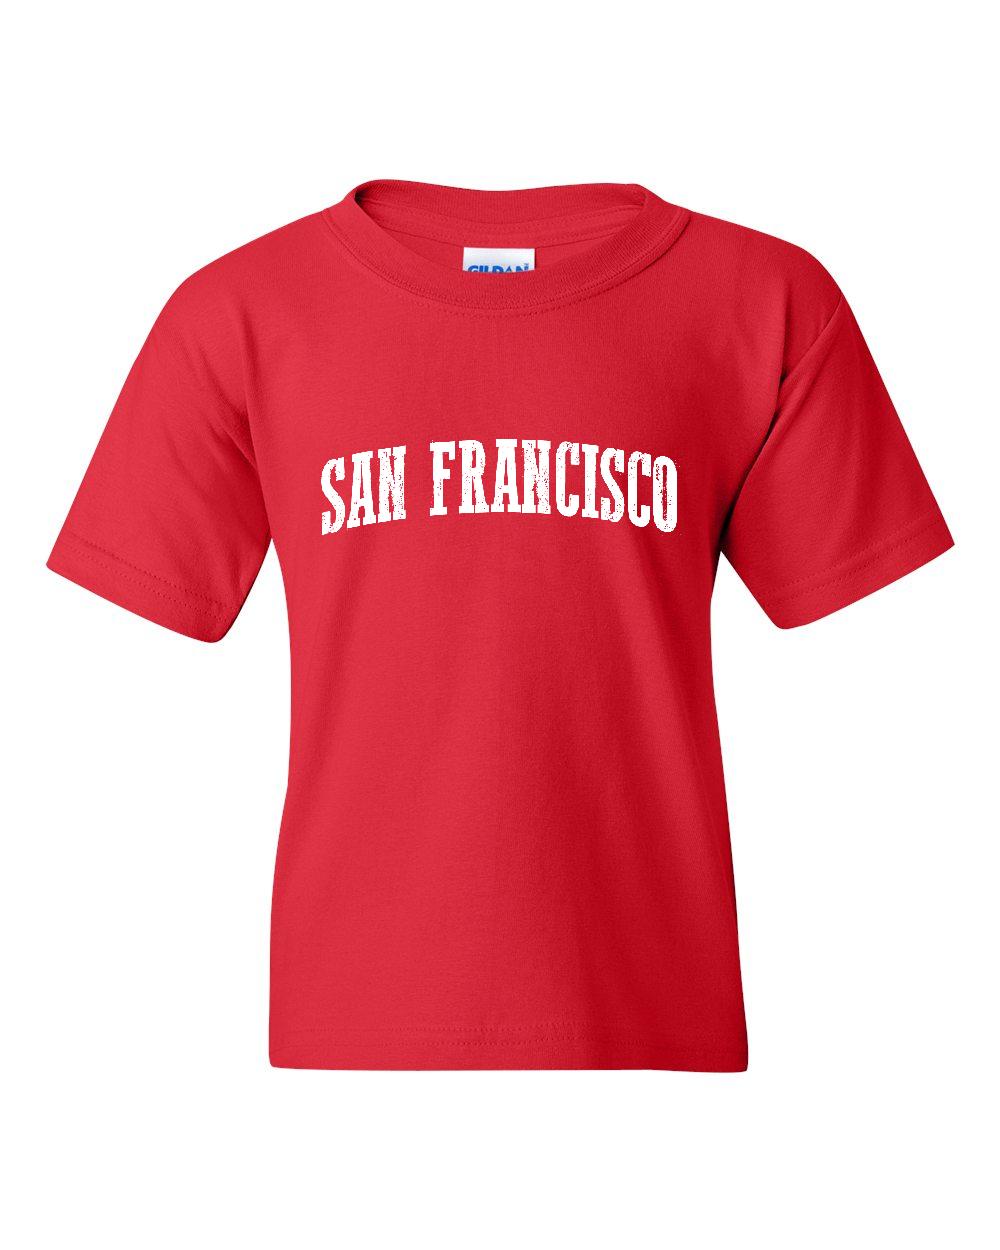 Artix - Big Girls T-Shirts and Tank Tops, up to Big Girls Size 24 - San Francisco - image 1 of 5